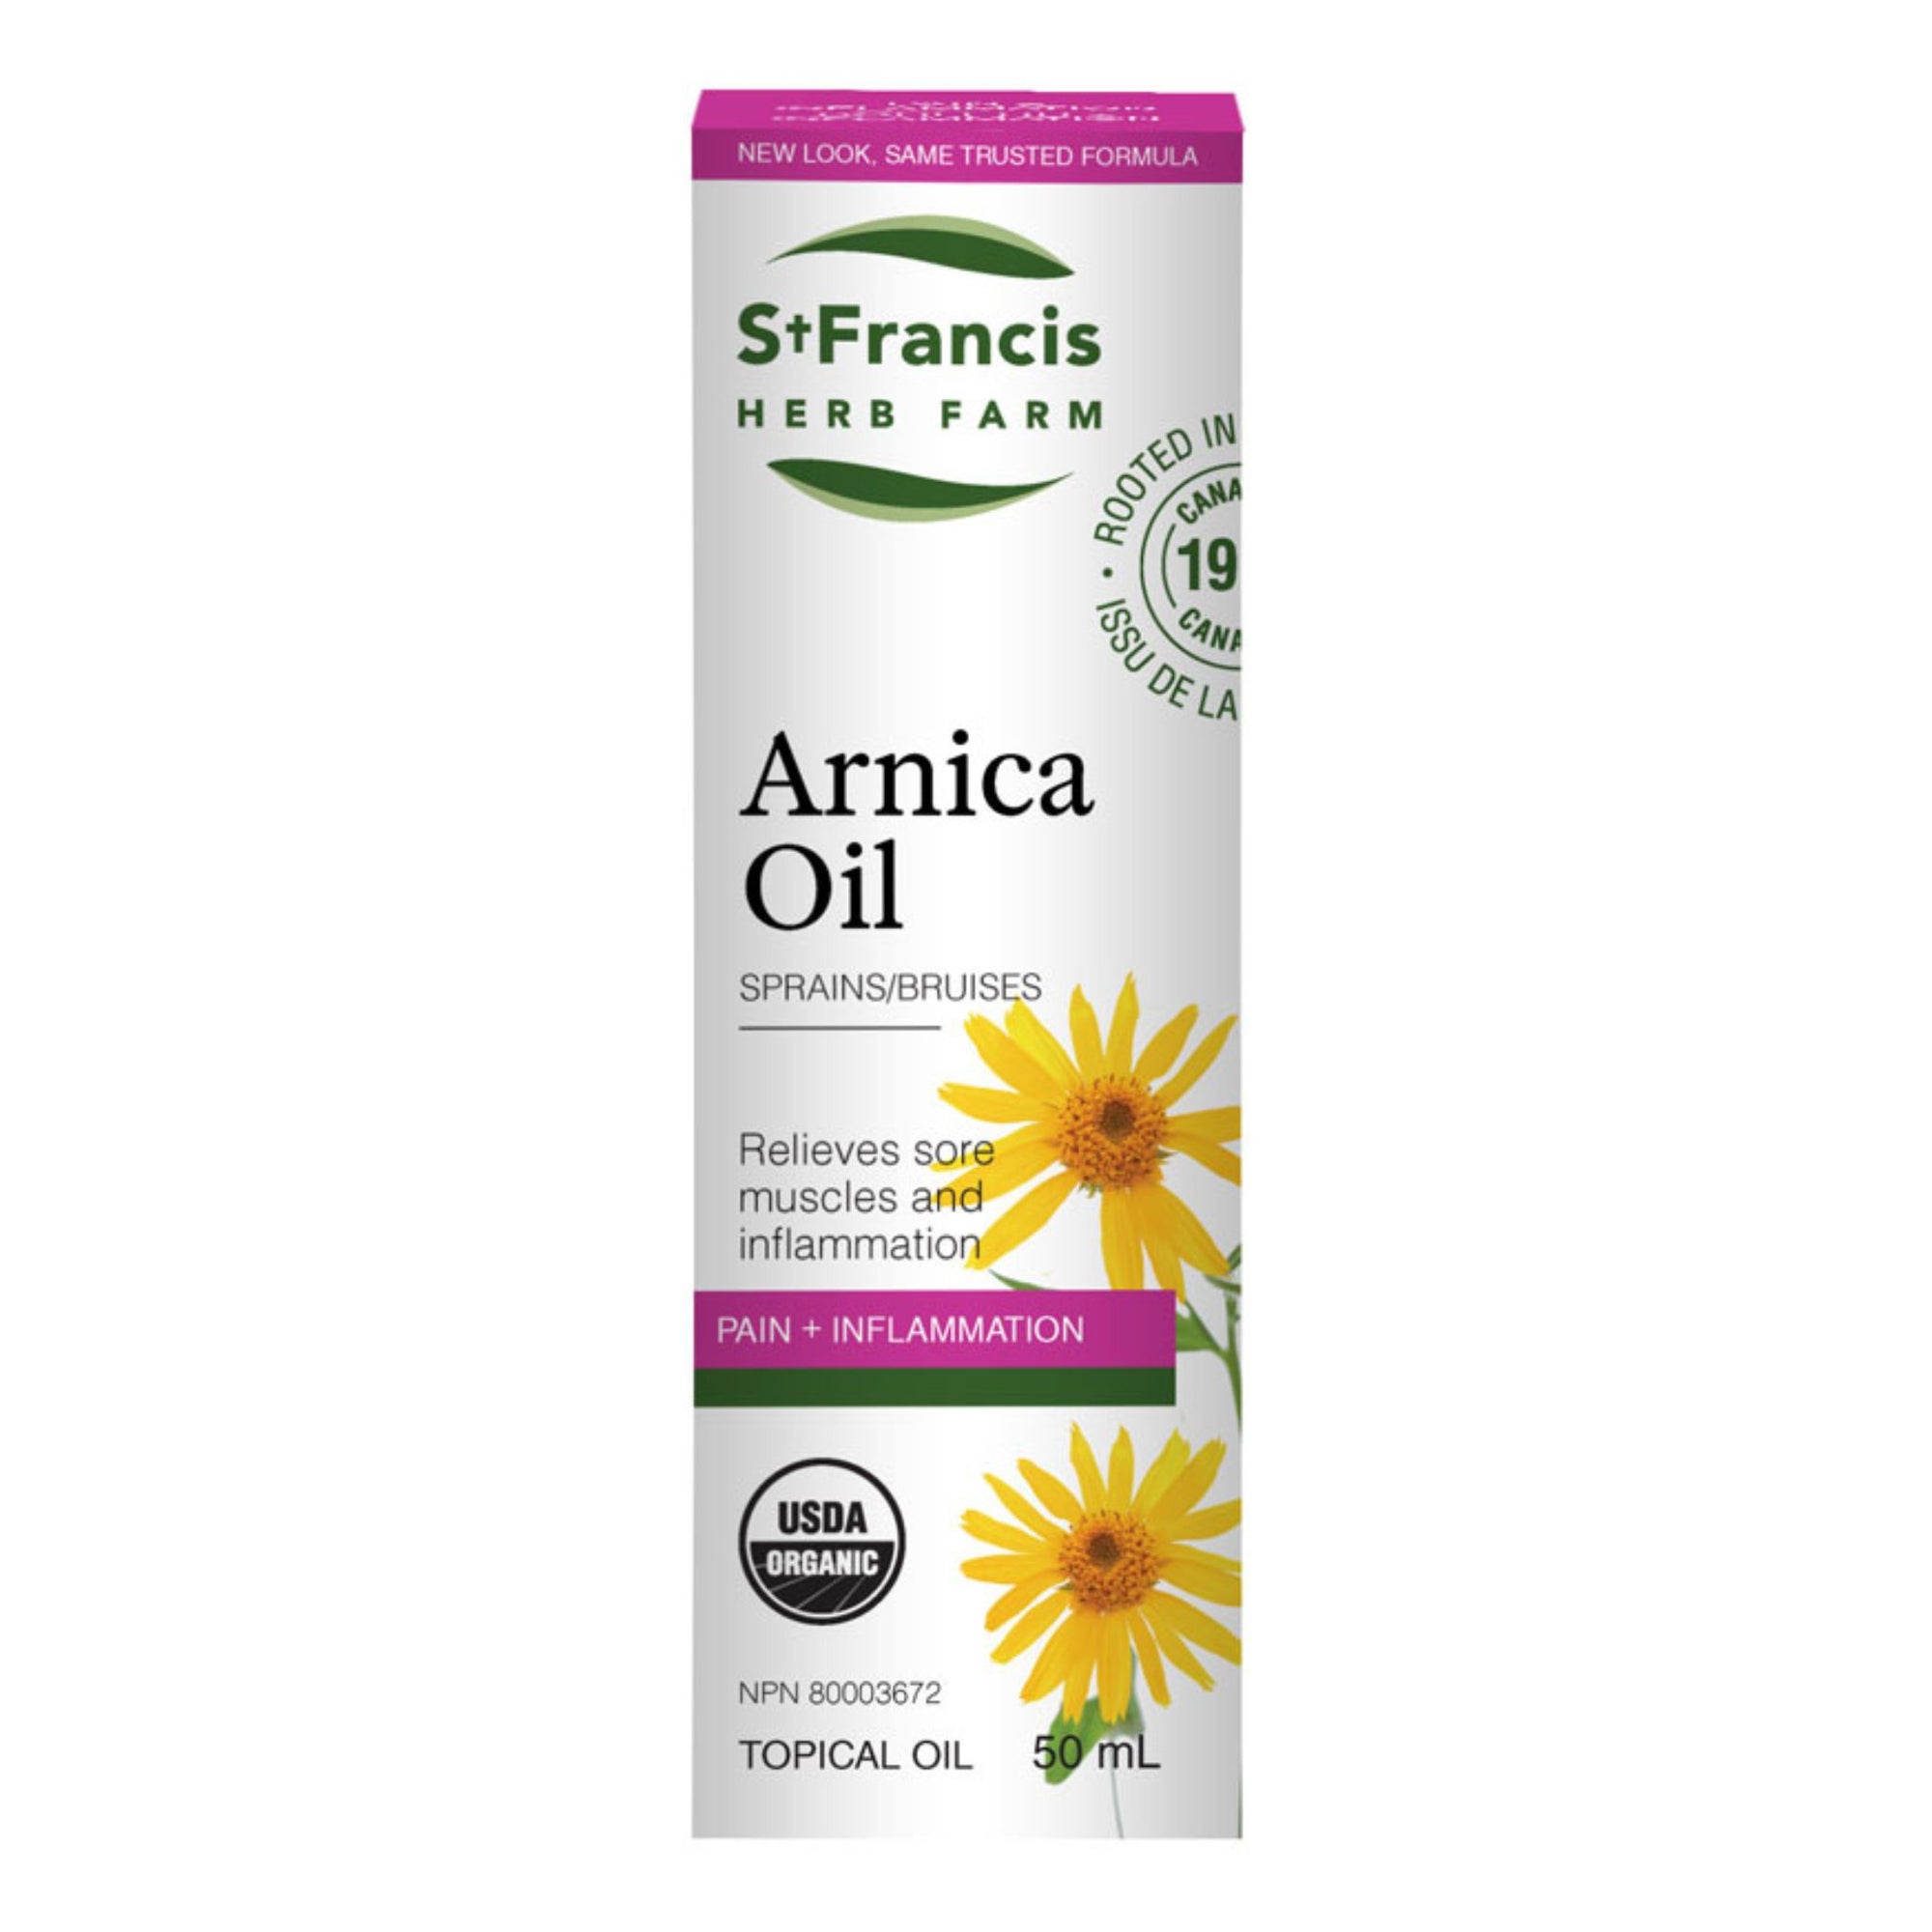 St. Francis Arnica Oil 50ml